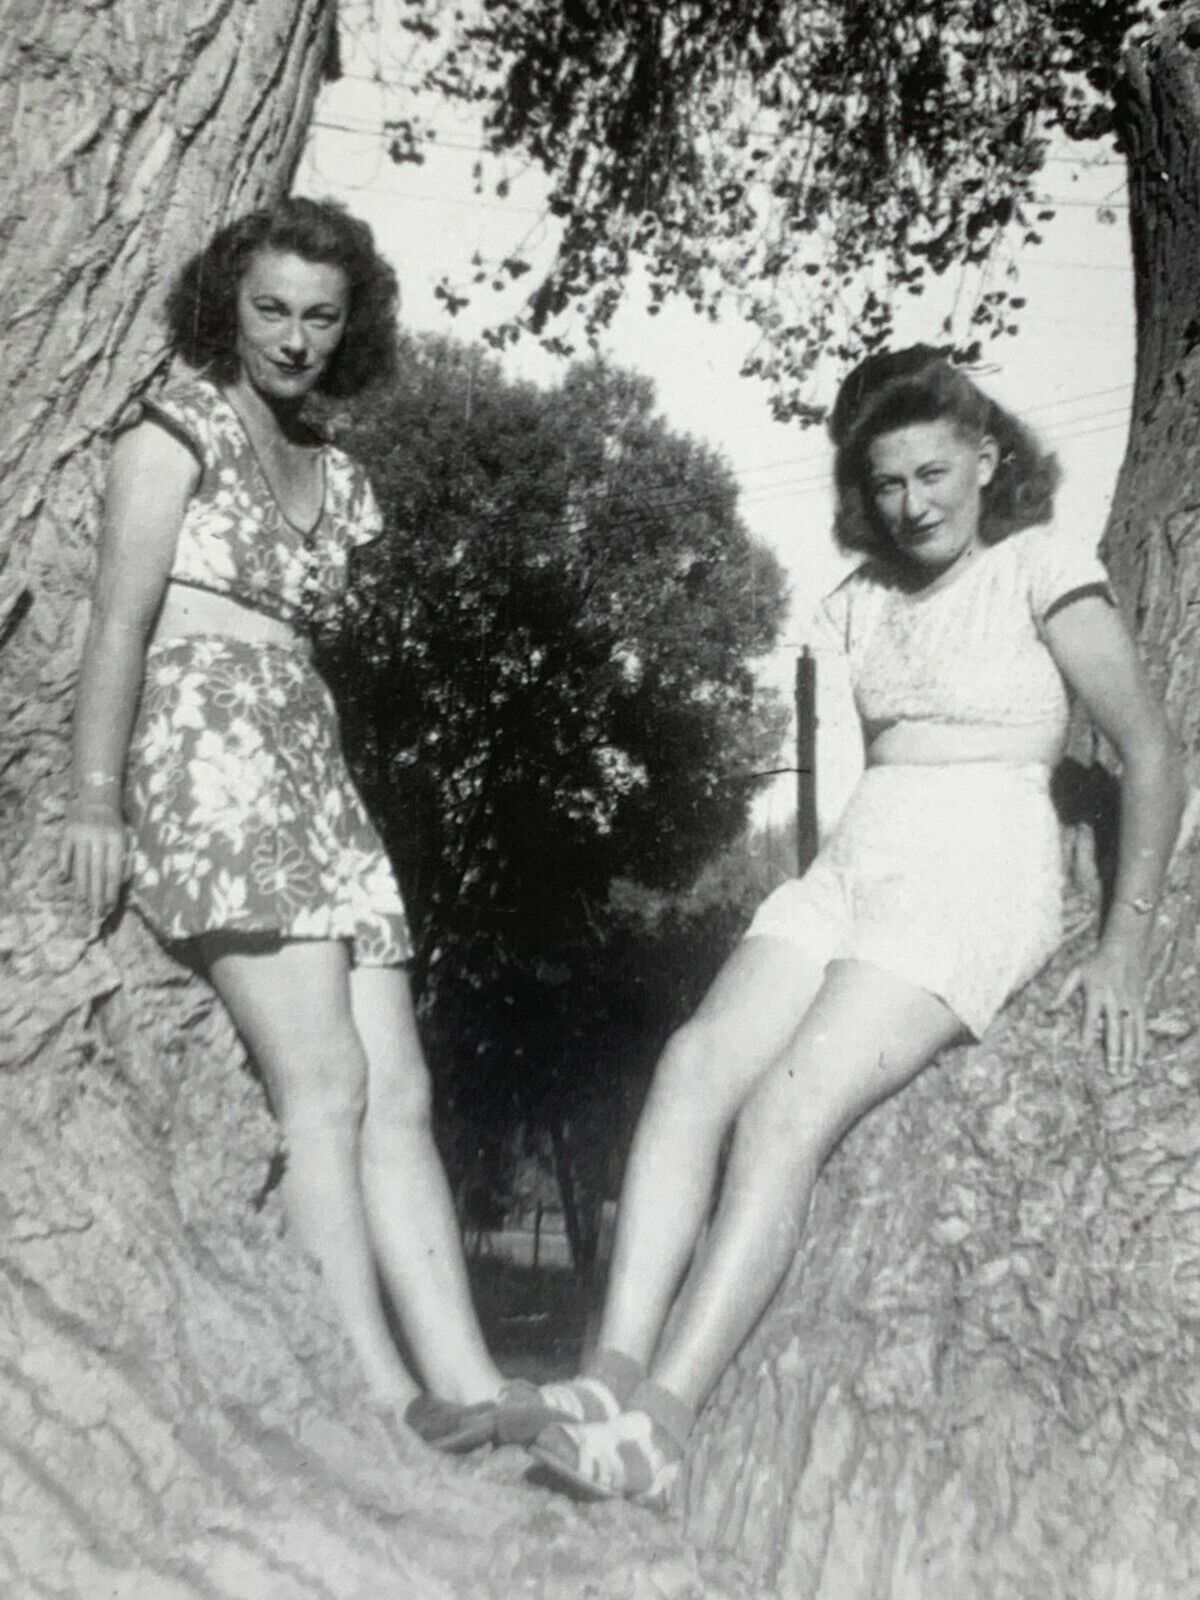 AxH) Found Photograph Artistic 2 Beautiful Twin Beautiful Women In Tree